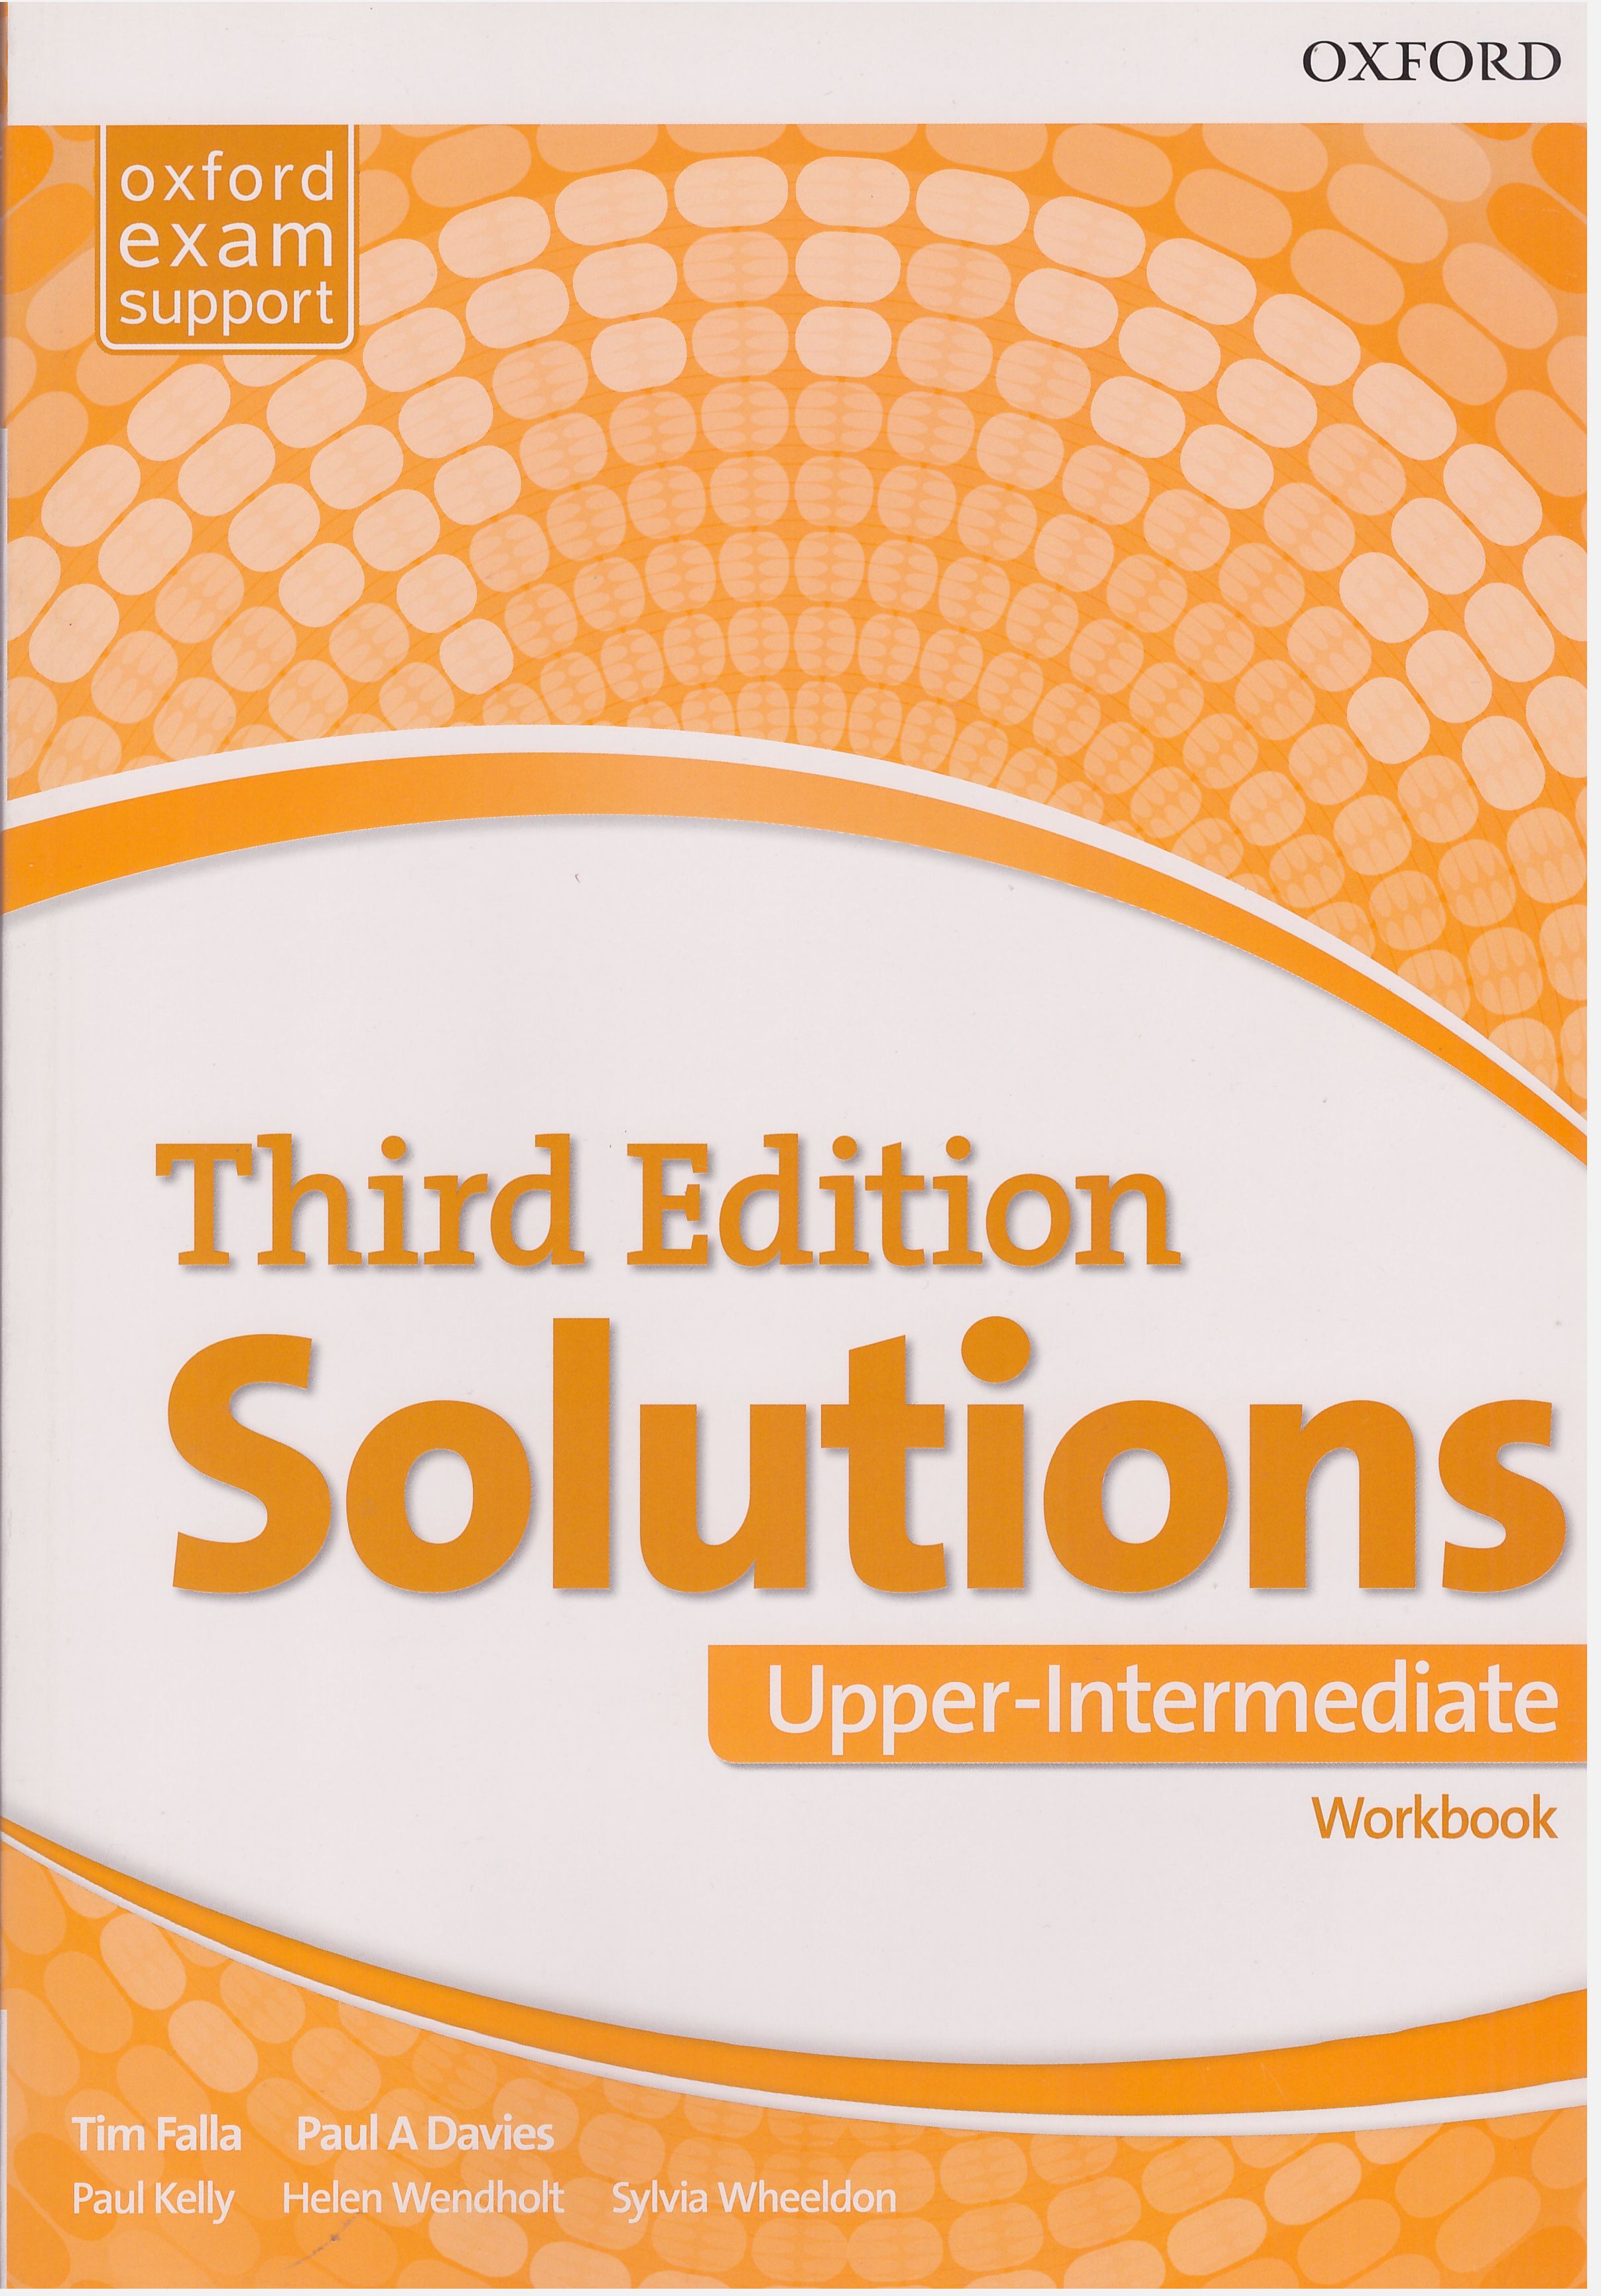 Solutions levels. Solutions pre-Intermediate 3rd Edition. Oxford solutions 3rd Edition Upper-Intermediate. Solutions pre-Intermediate 3 Edition. Солюшнс воркбук пре интермедиат.